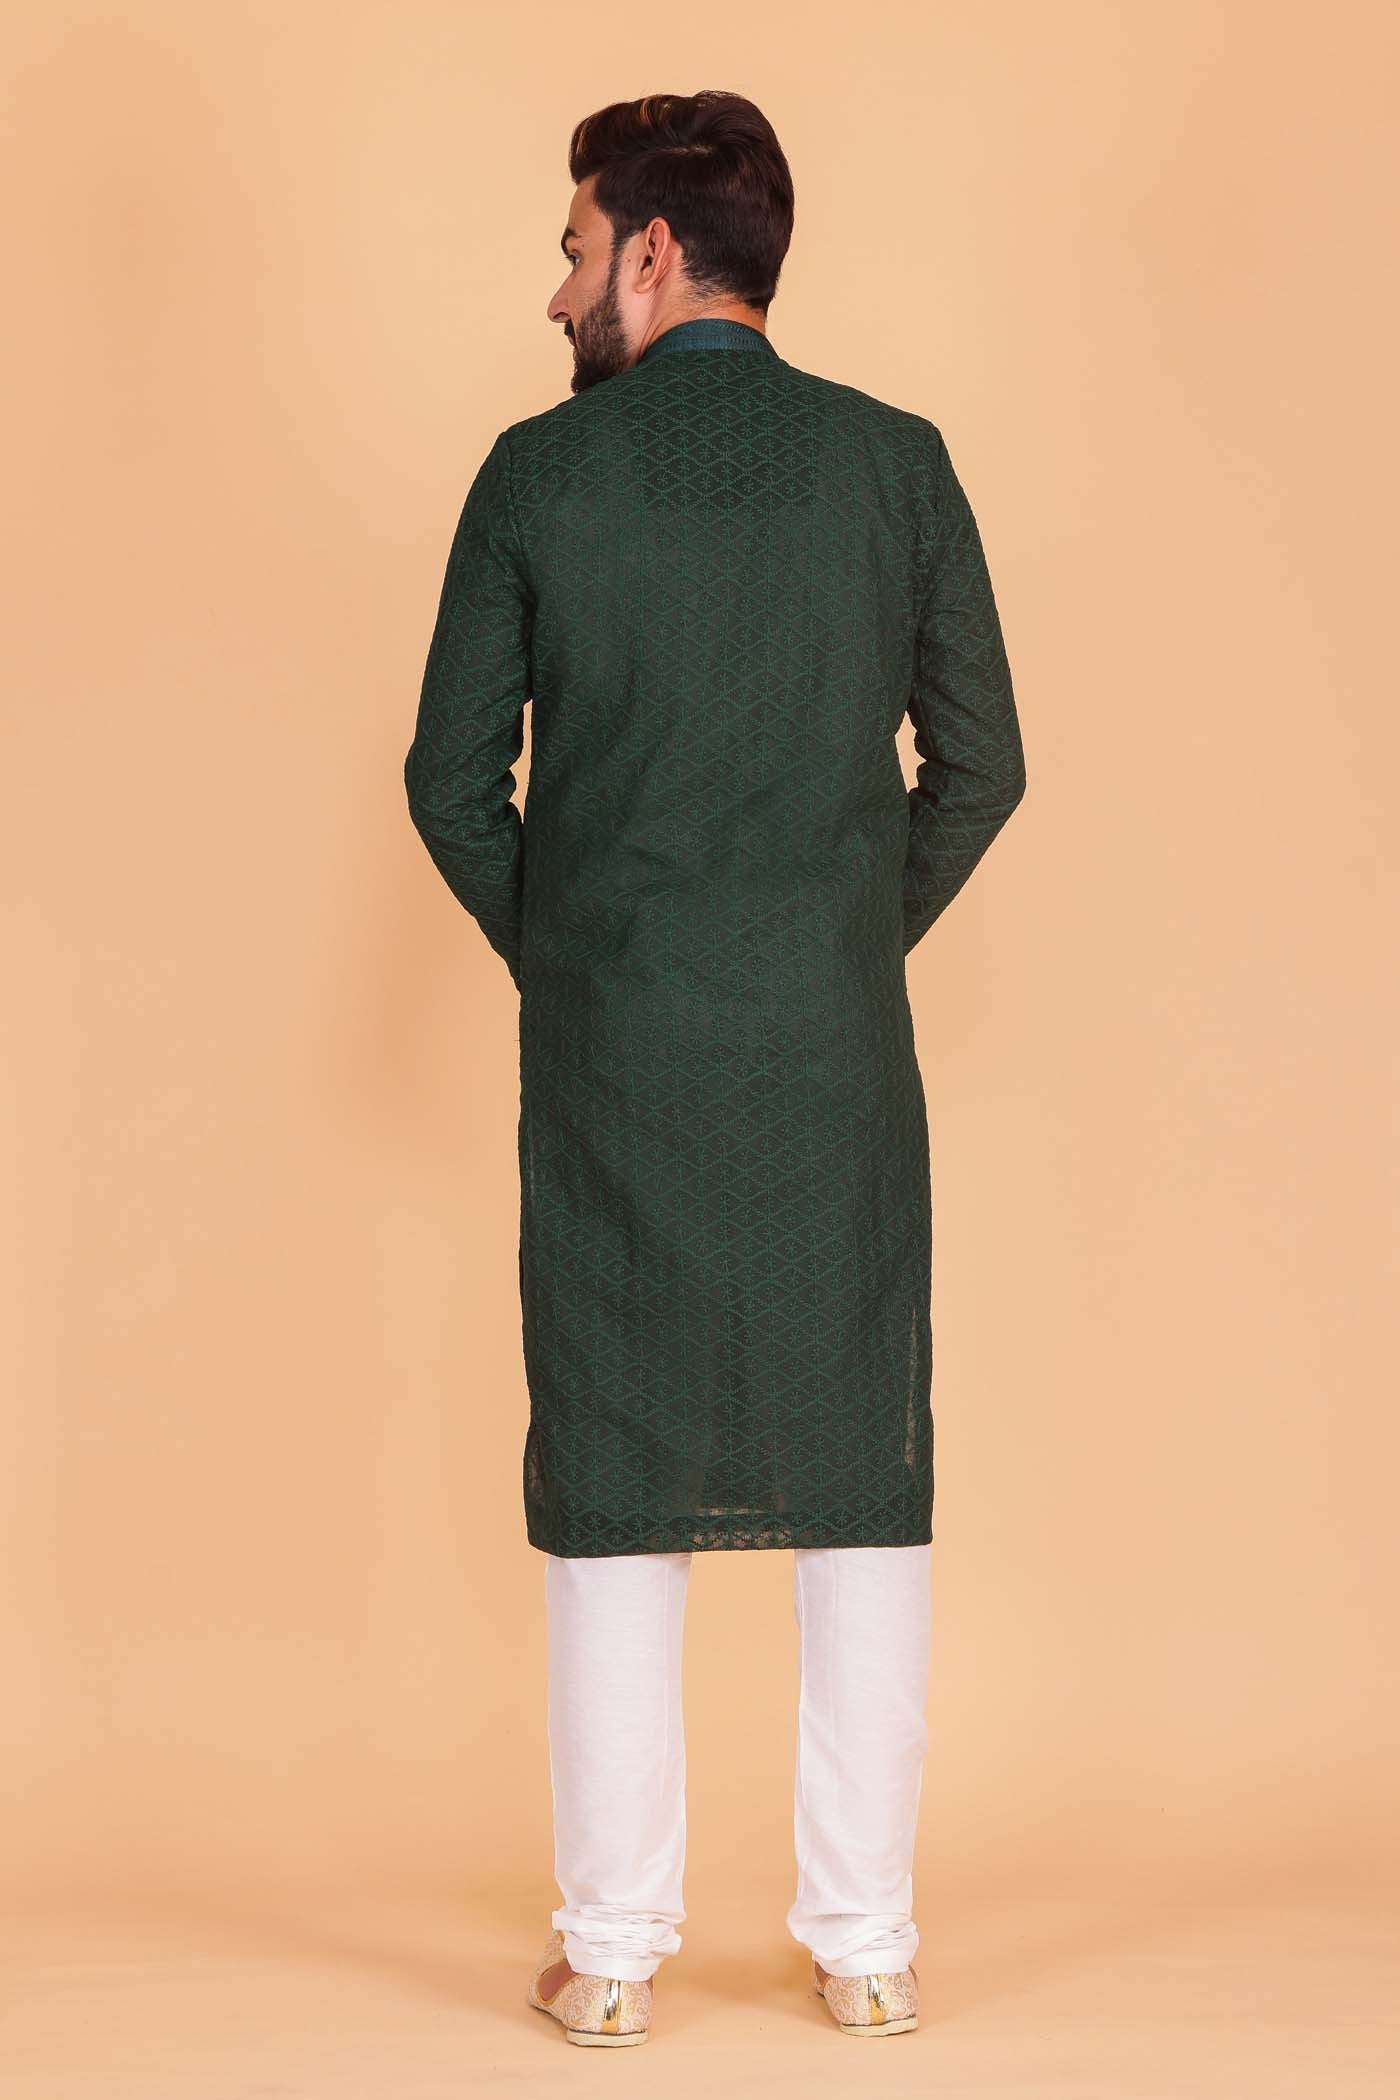 Bottle Green Lucknowi Kurta Suit with Resham Thread Work All Over